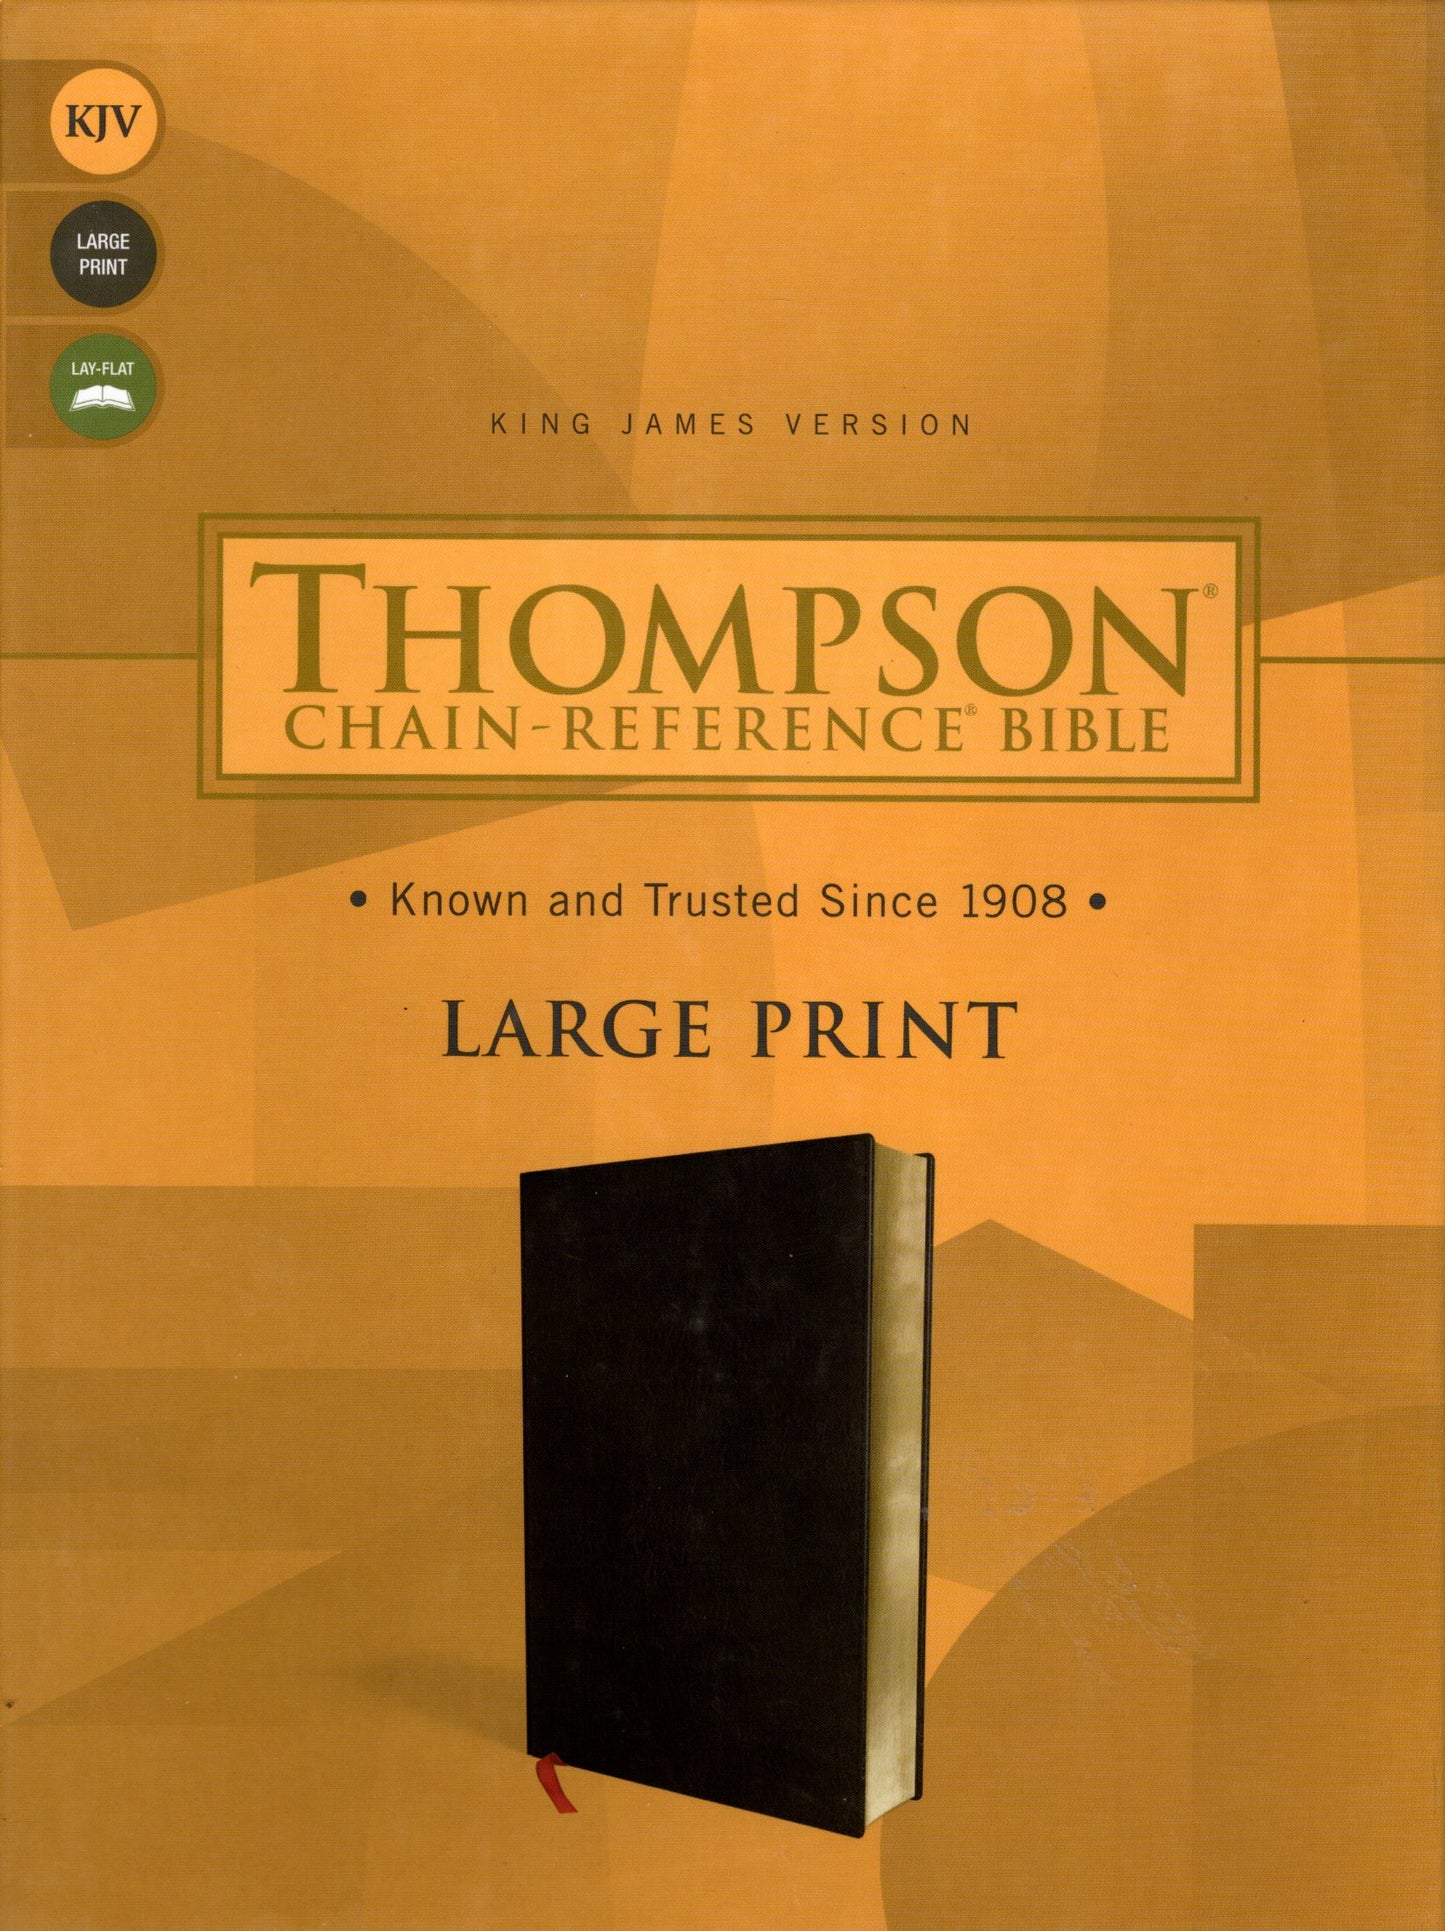 Zondervan KJV Thompson® Chain-Reference® Bible, Large Print - Bonded Leather